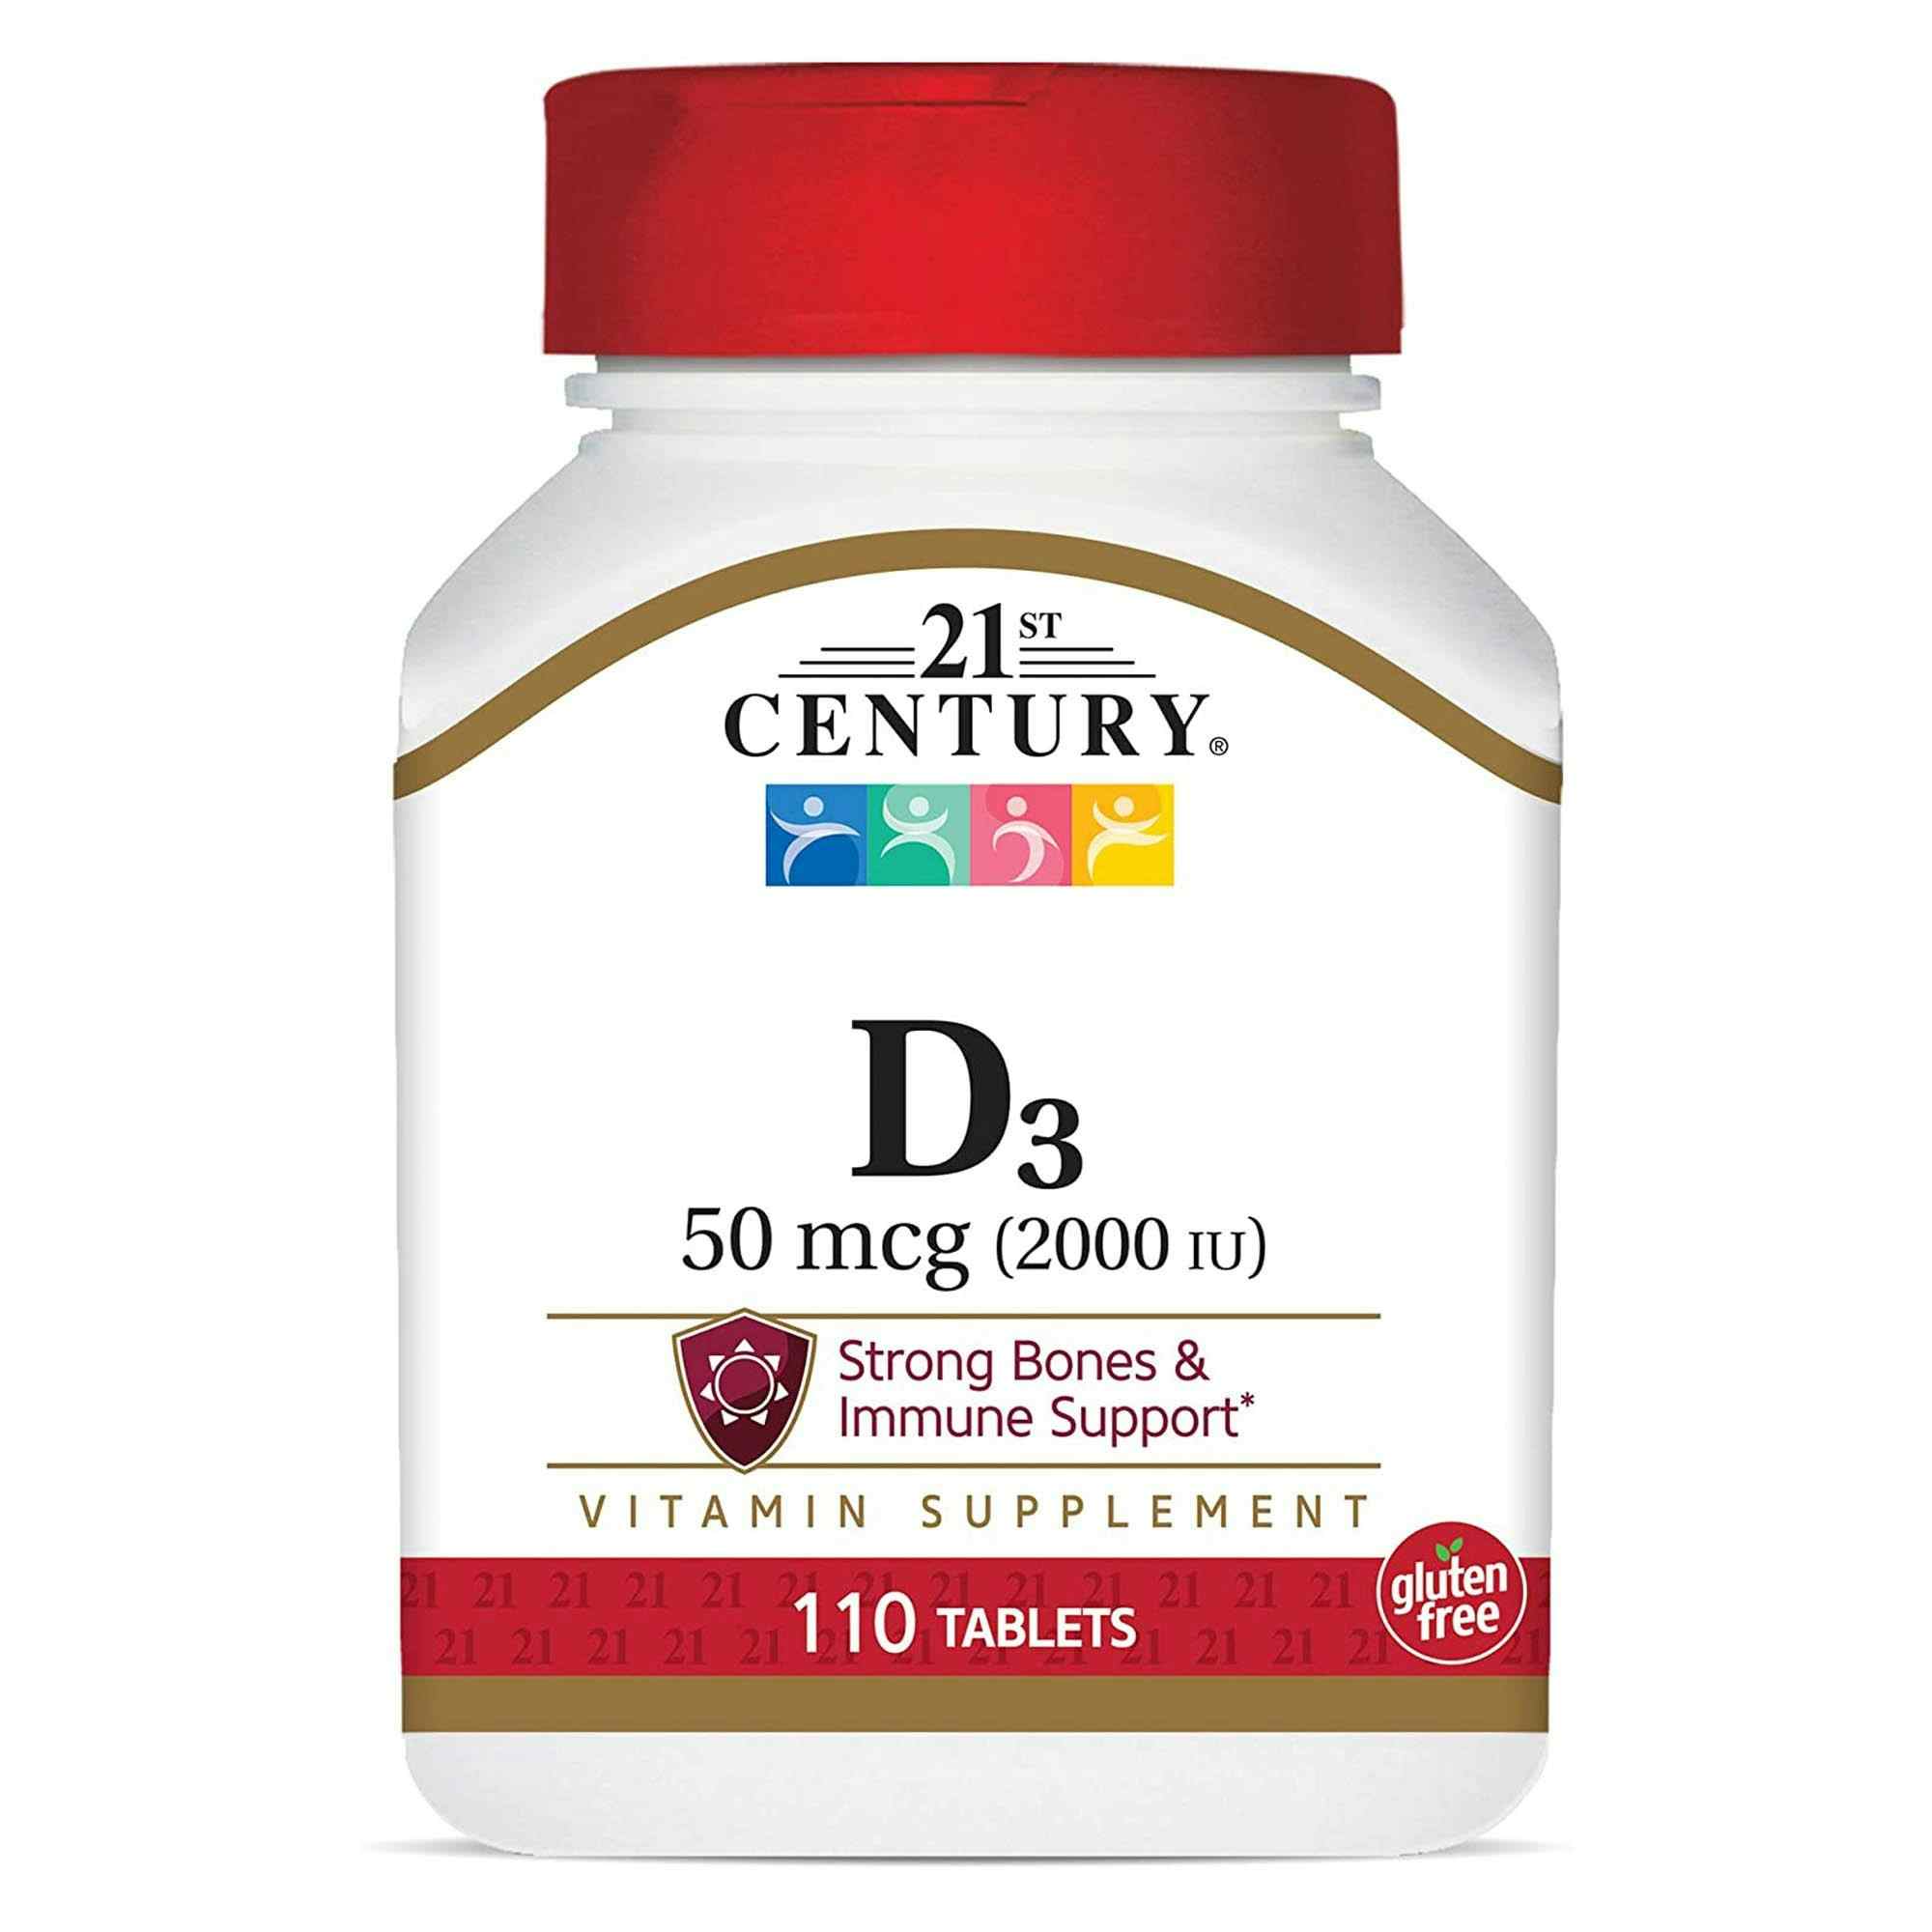 21st Century D3 Vitamin Supplement, 74098527111, 2000 IU - Bottle of 110 Tablets